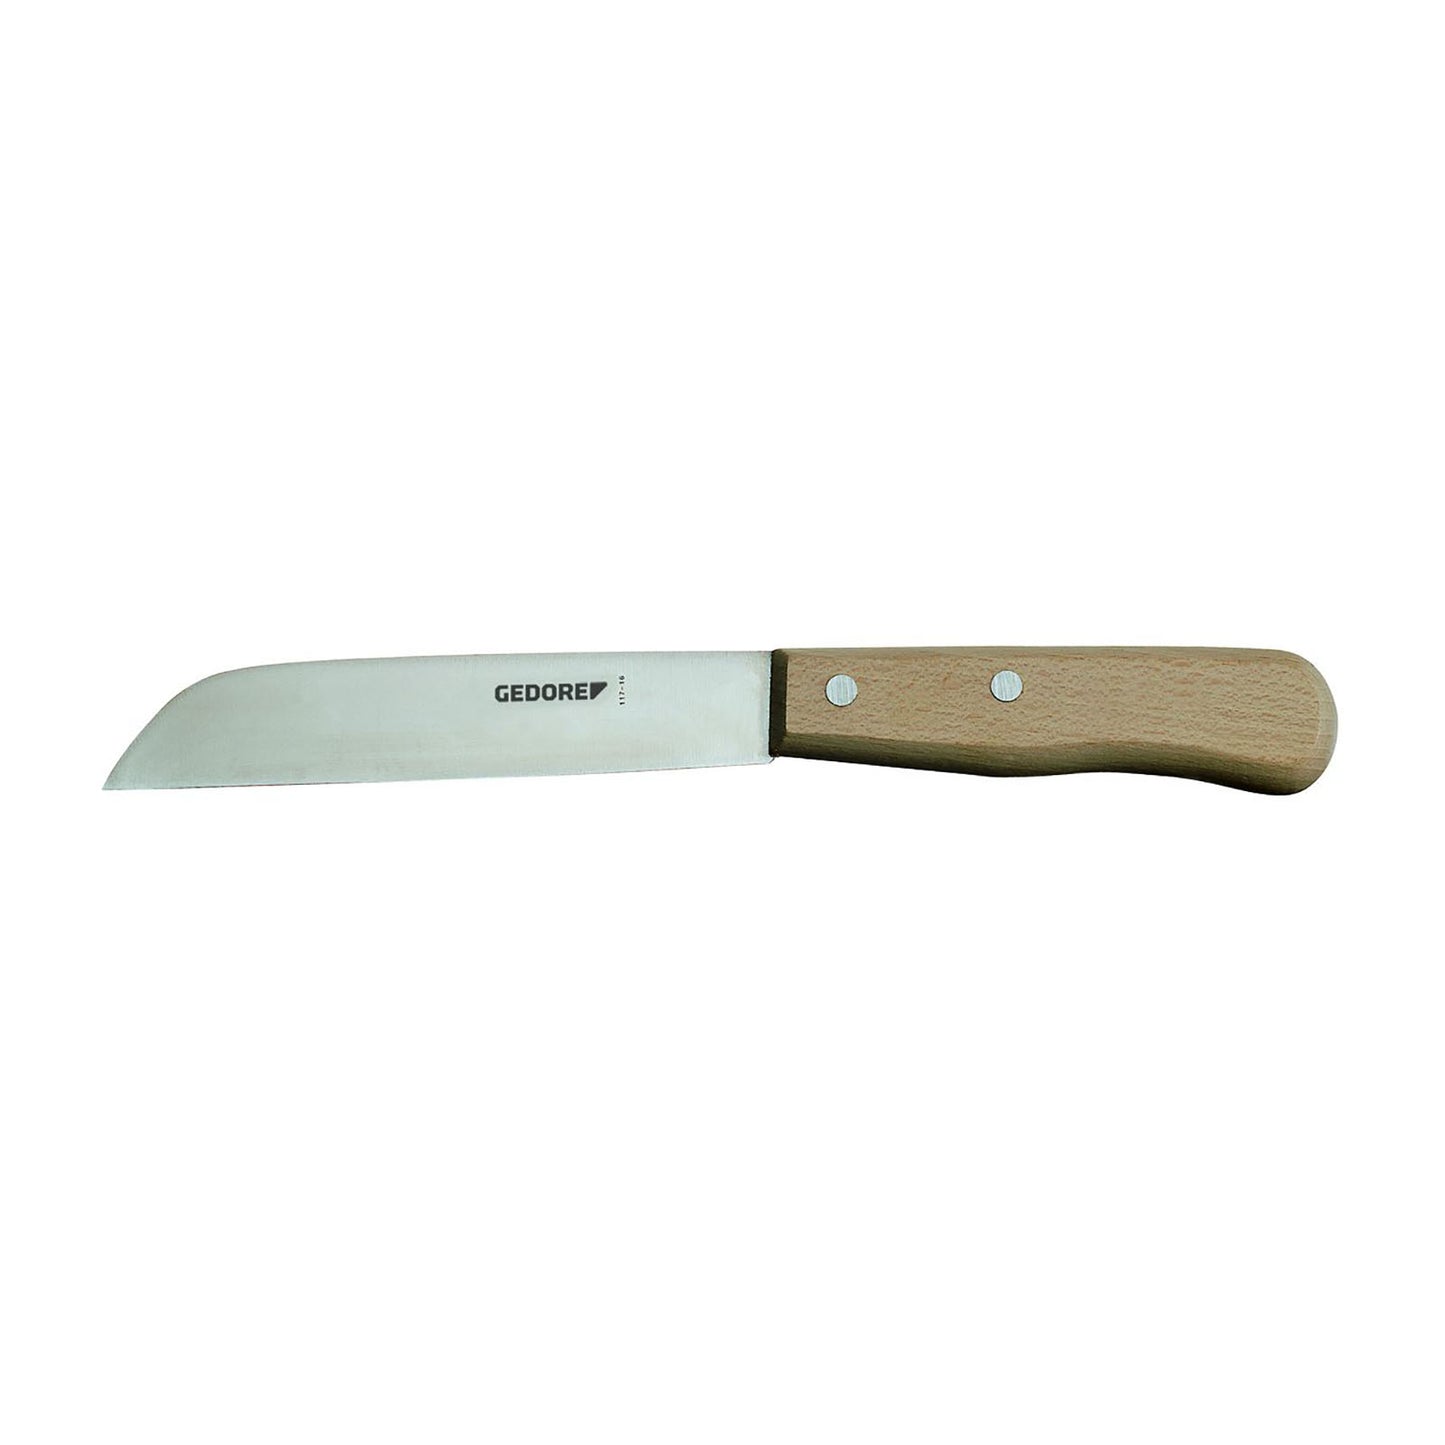 GEDORE 0117-10 - Work Knife (9102520)